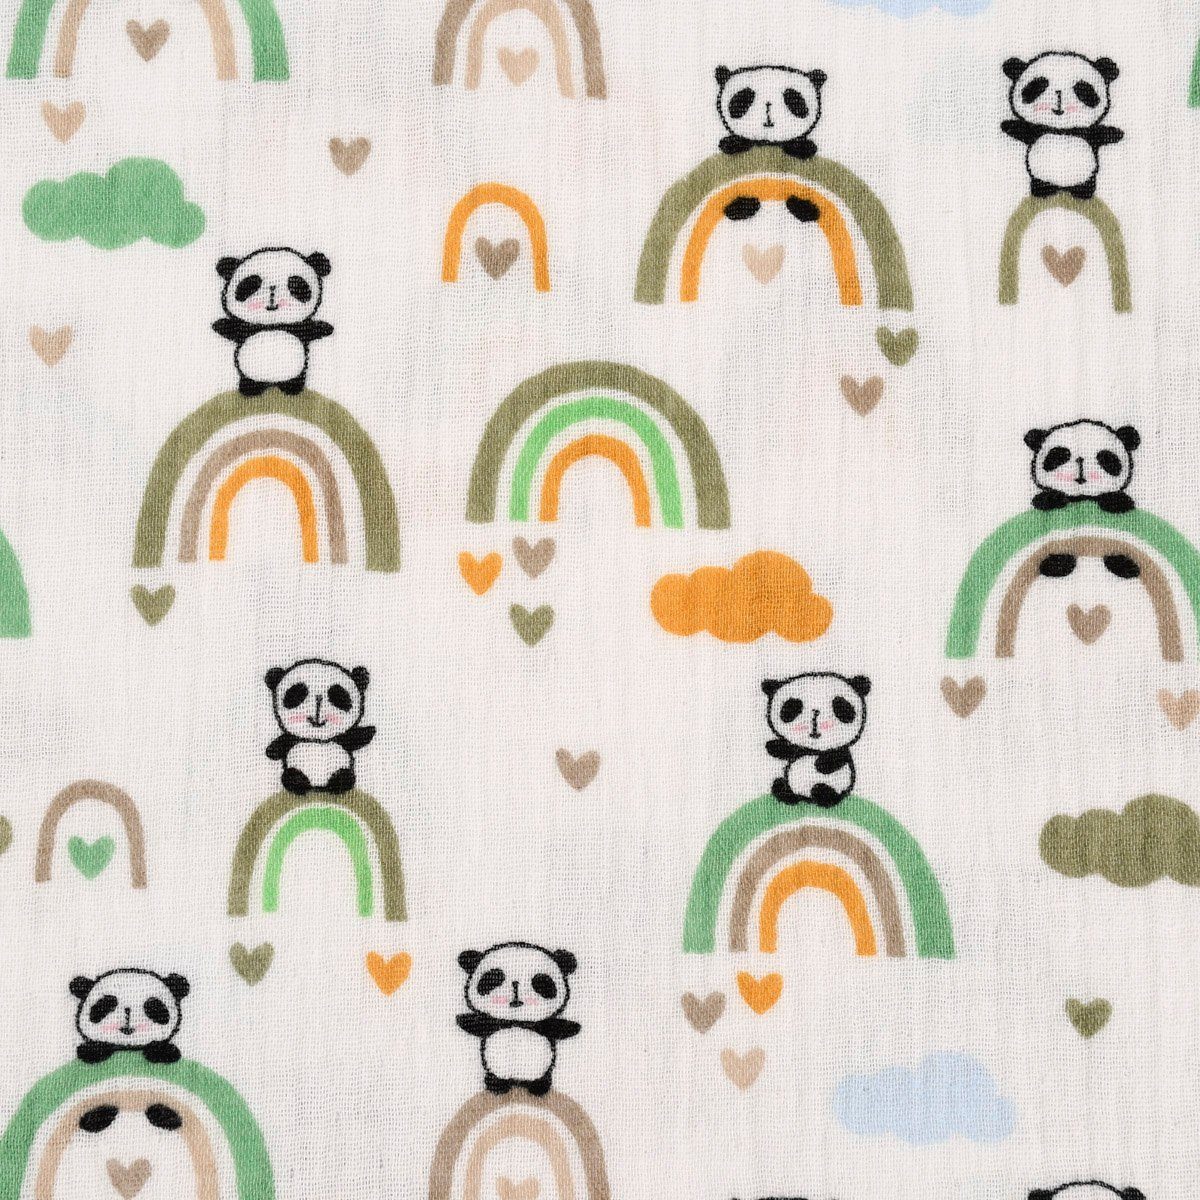 SCHÖNER LEBEN. Stoff Double Gauze glatt Regenbogen Panda Wolken weiß grün ocker blau 1,30m